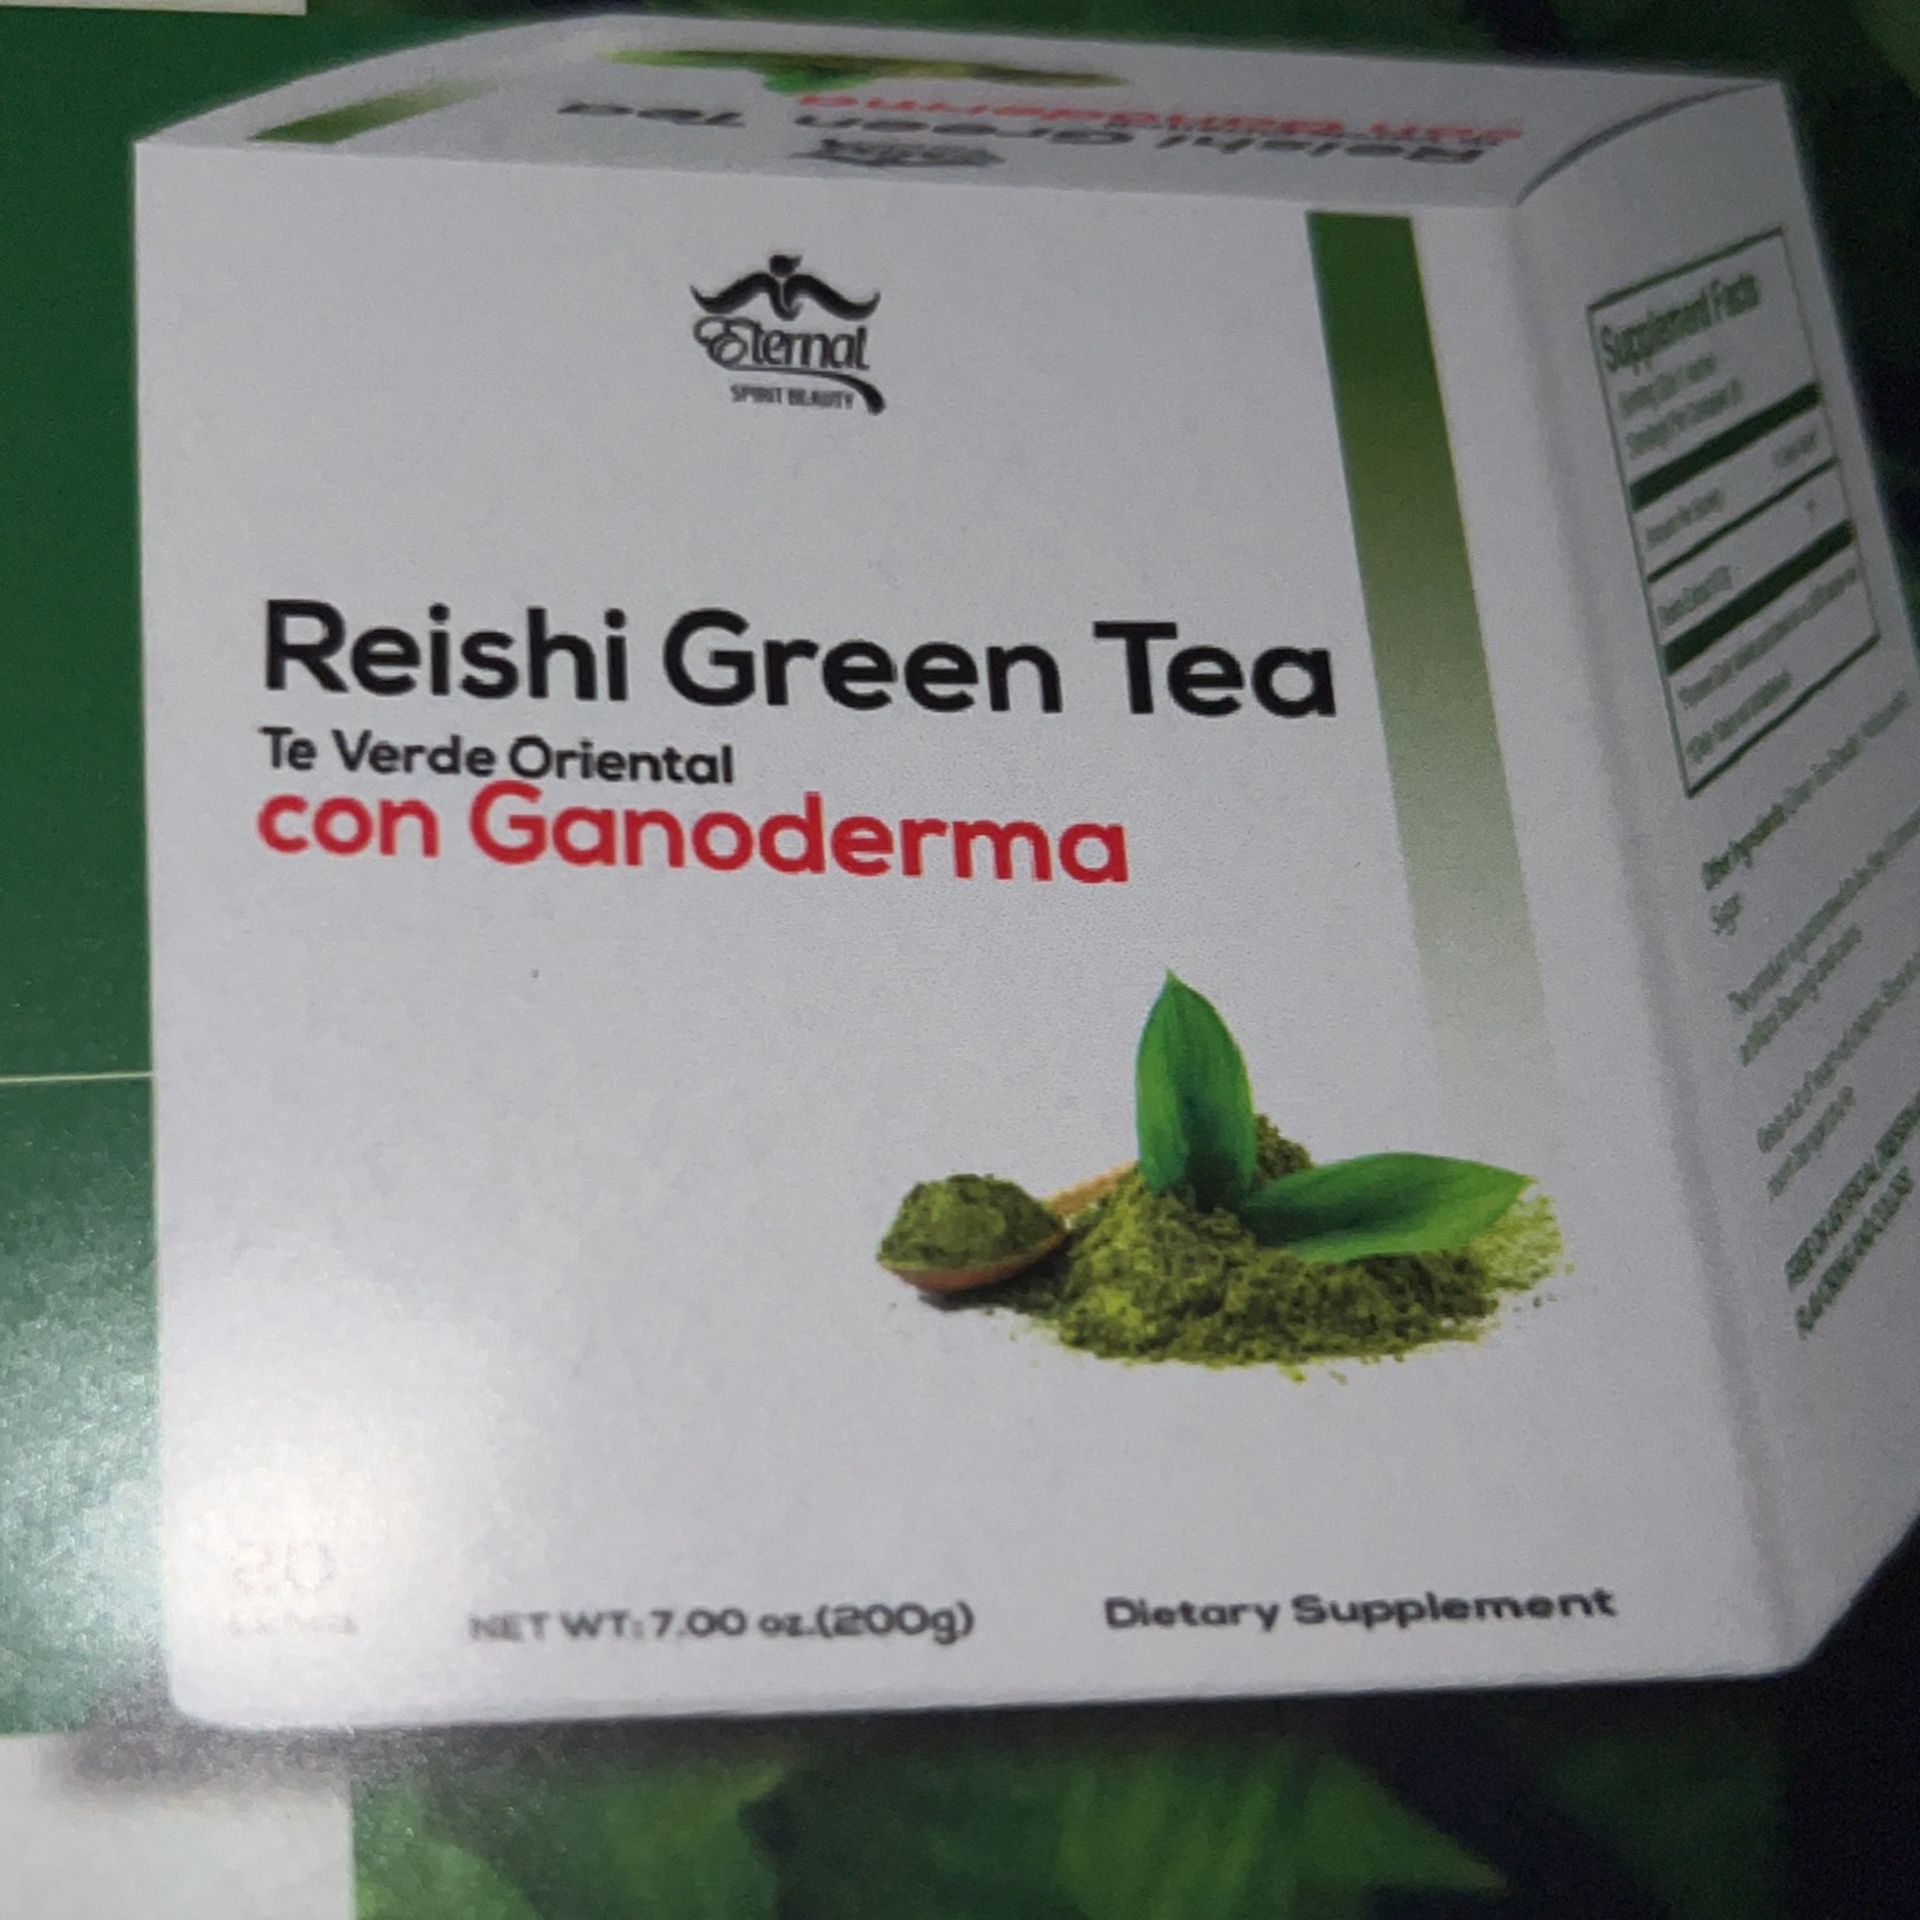 Reish Green Tea